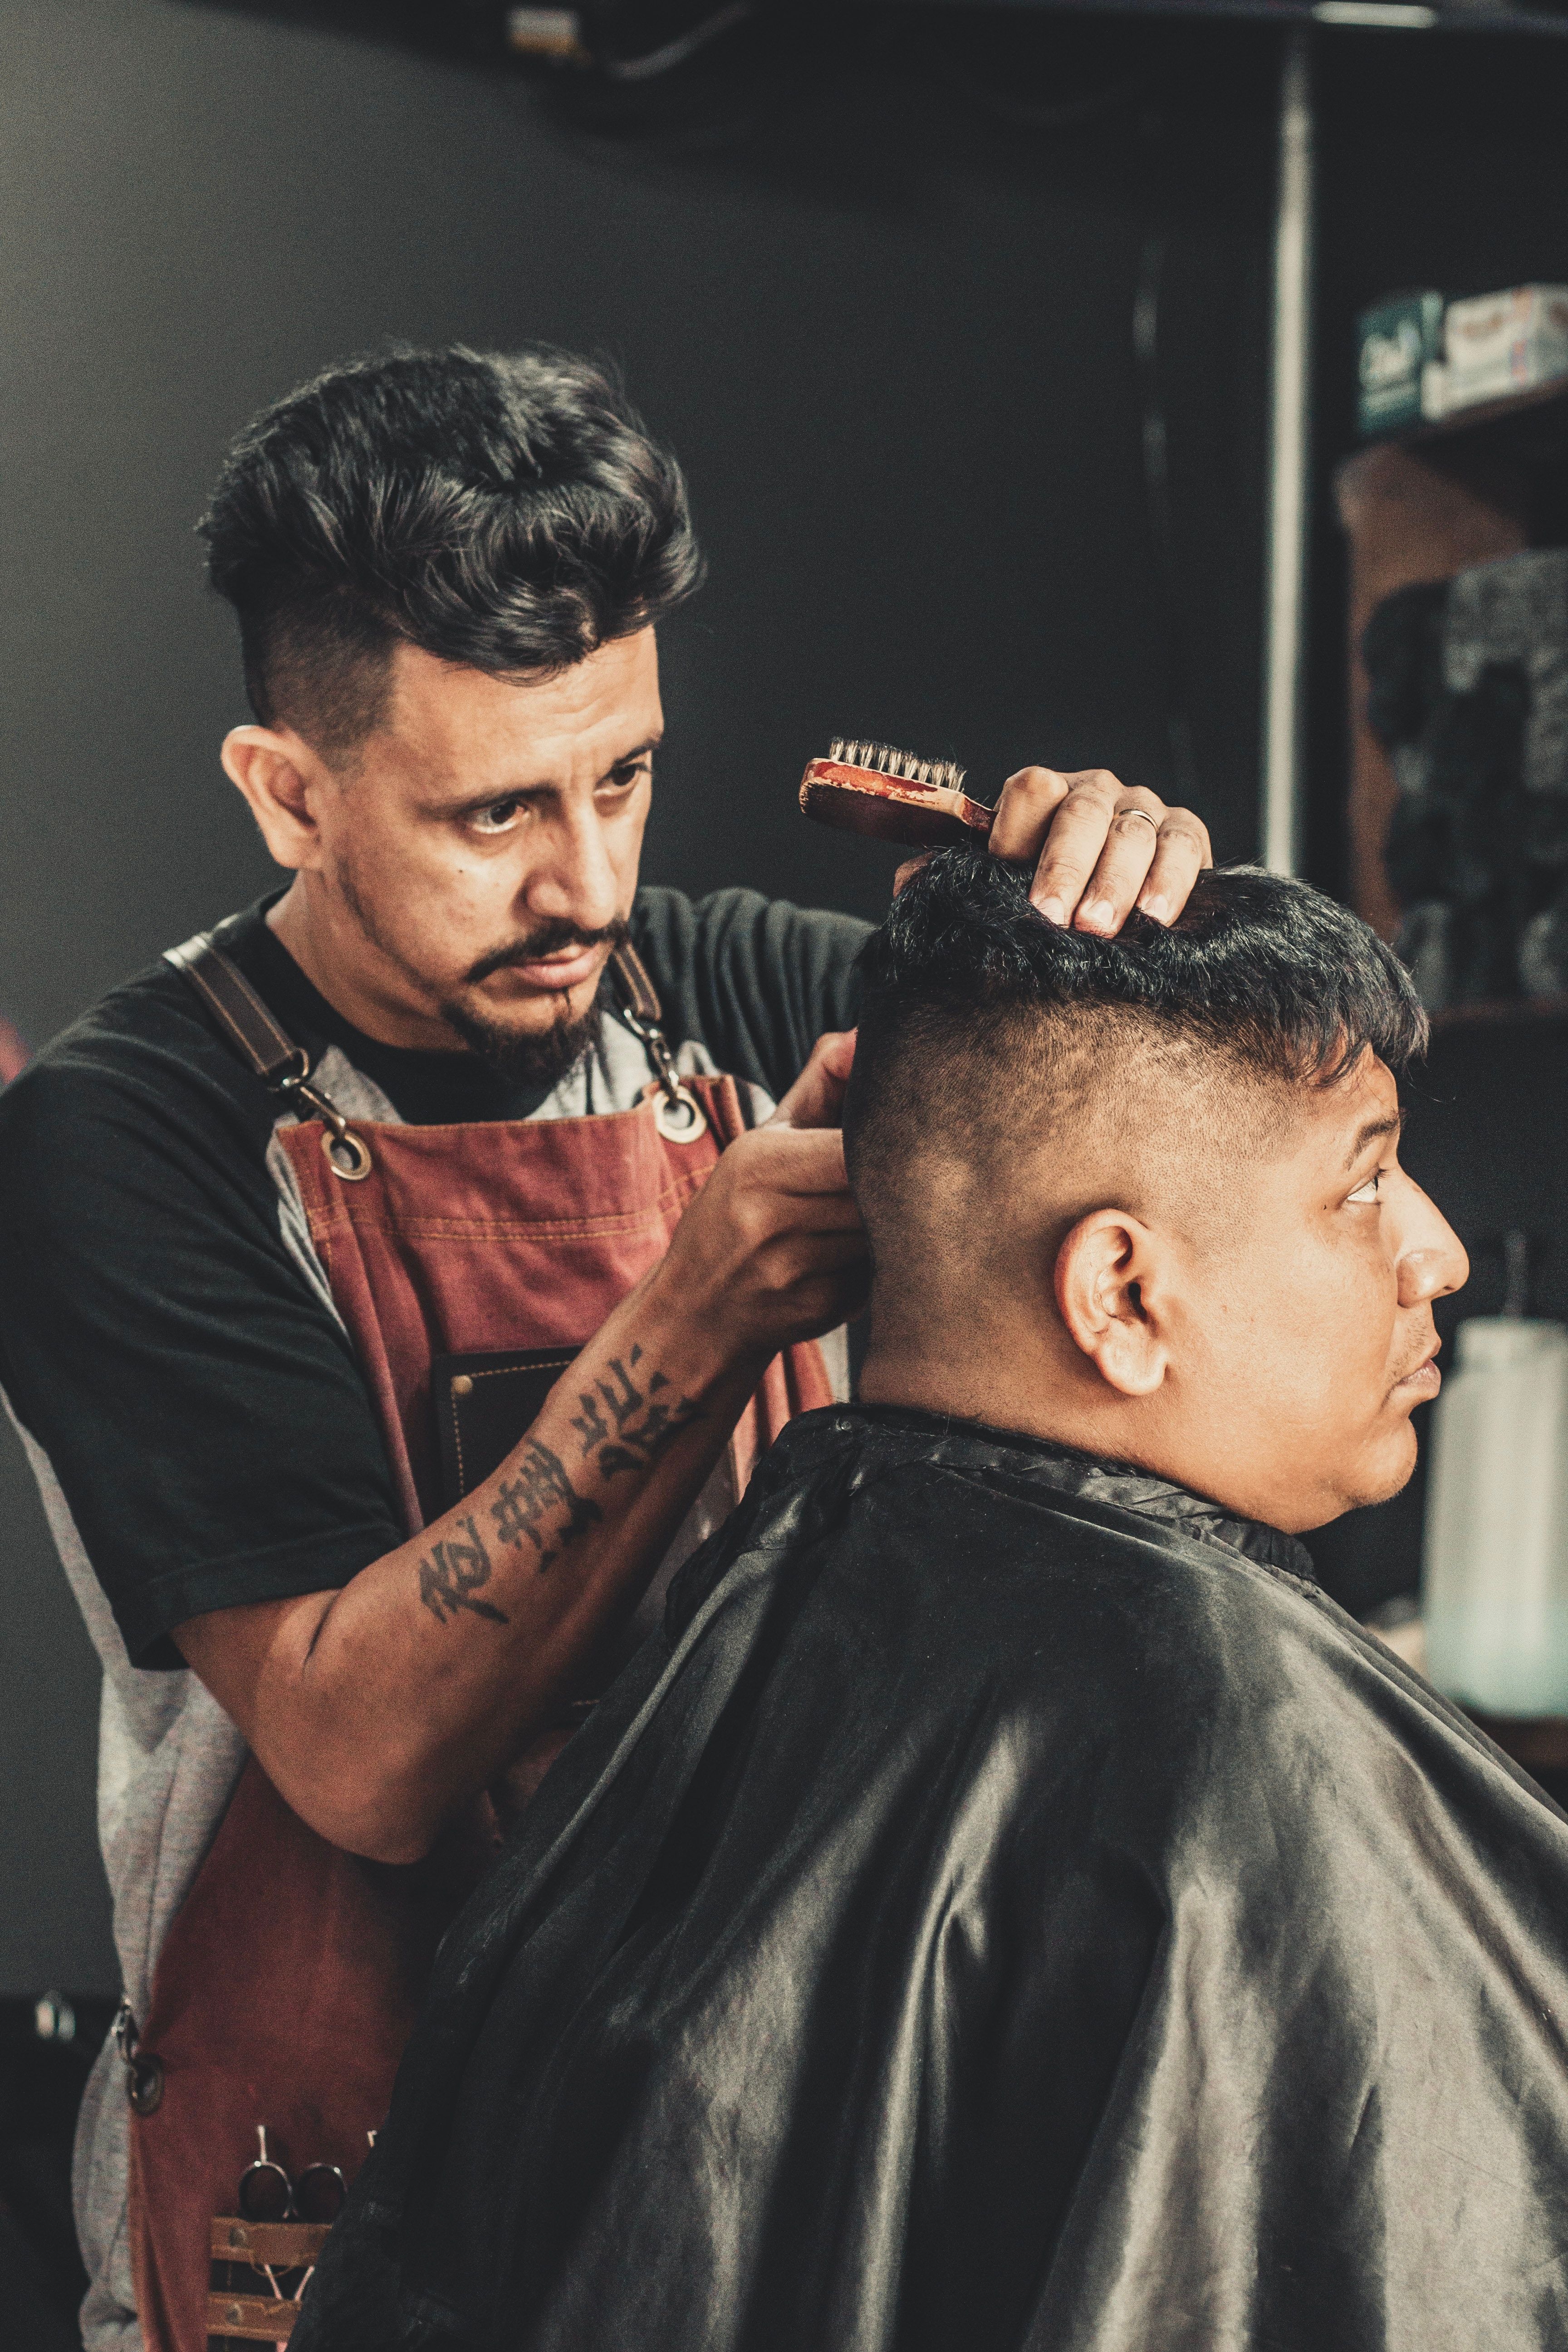 Barber Cutting Man's Hair · Free